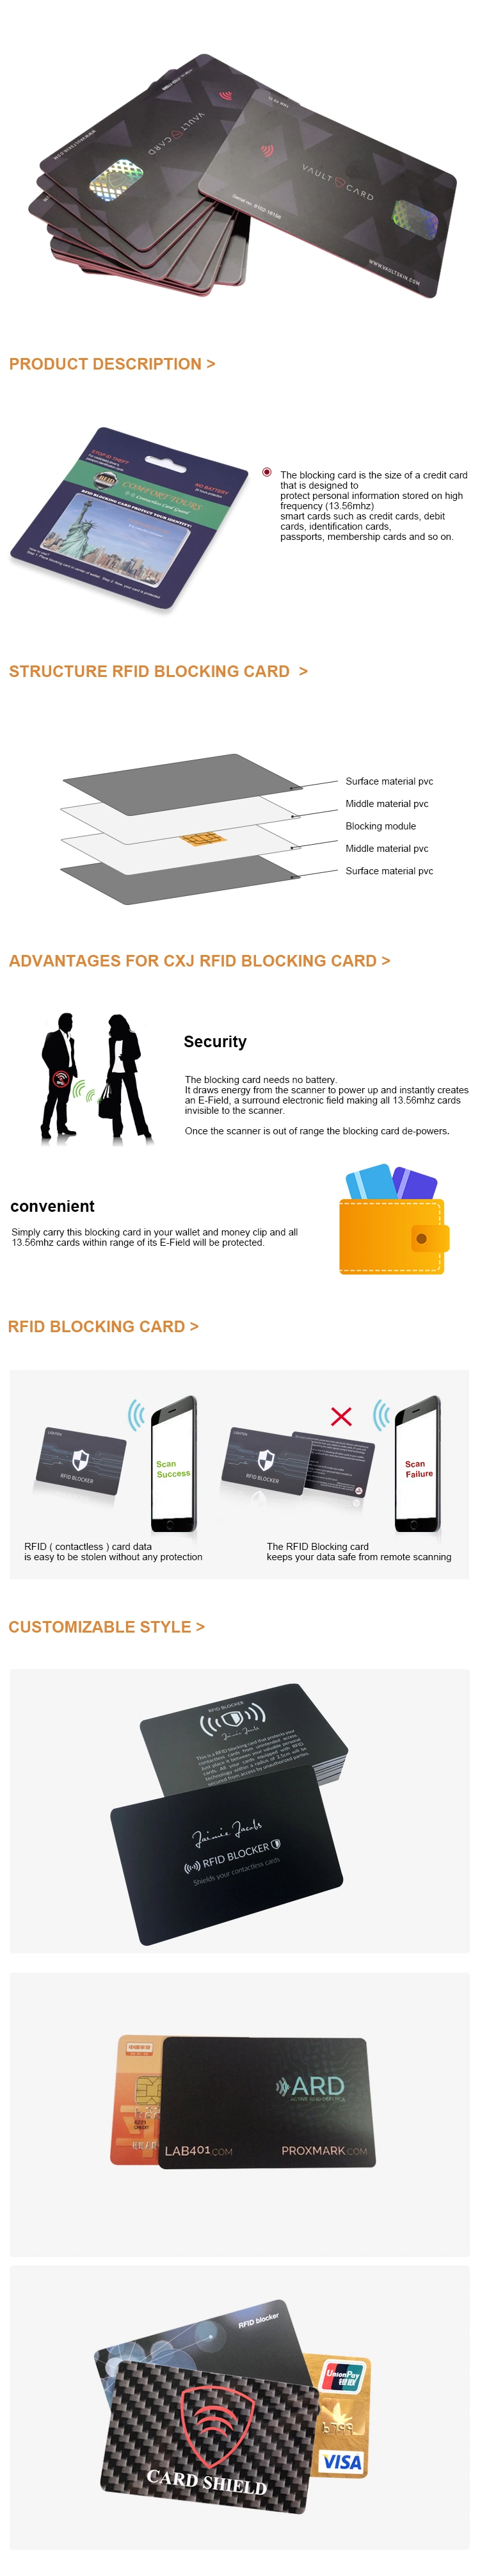 RFID  Wide Range Protection PVC  RFID  Block  Blocking  Cardprintable